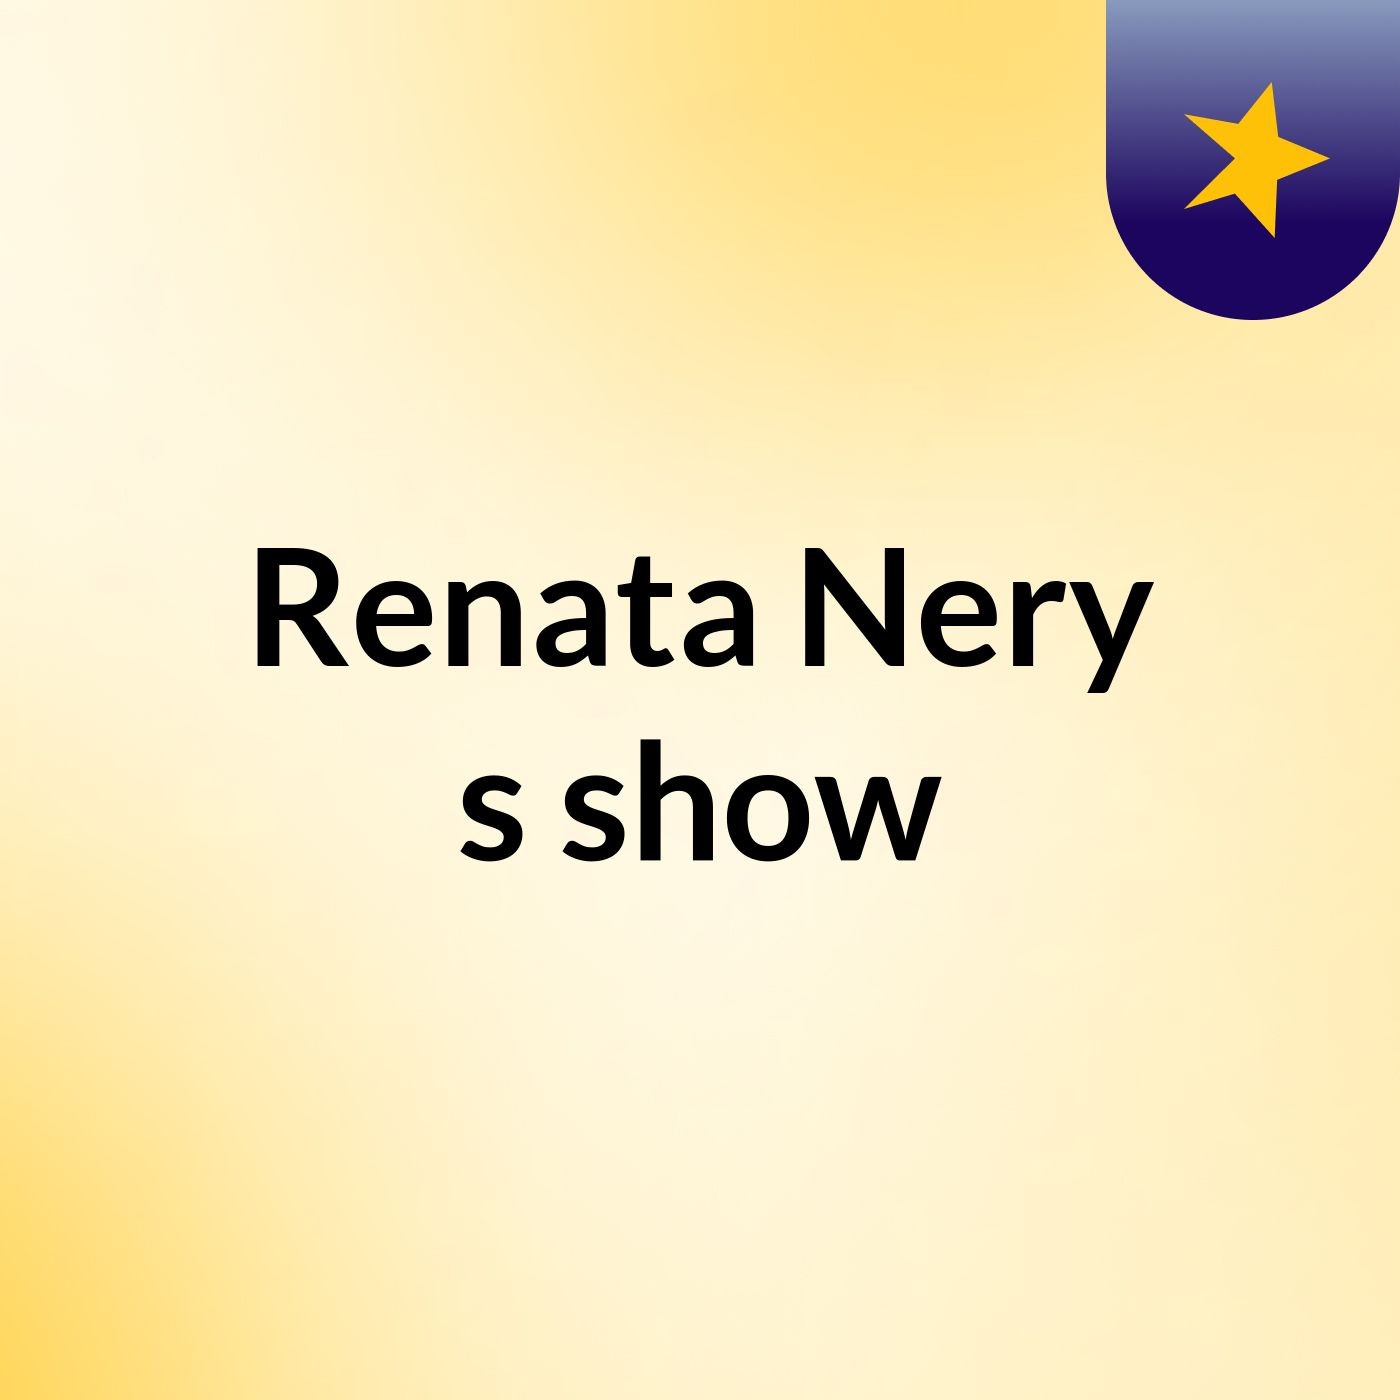 Renata Nery's show